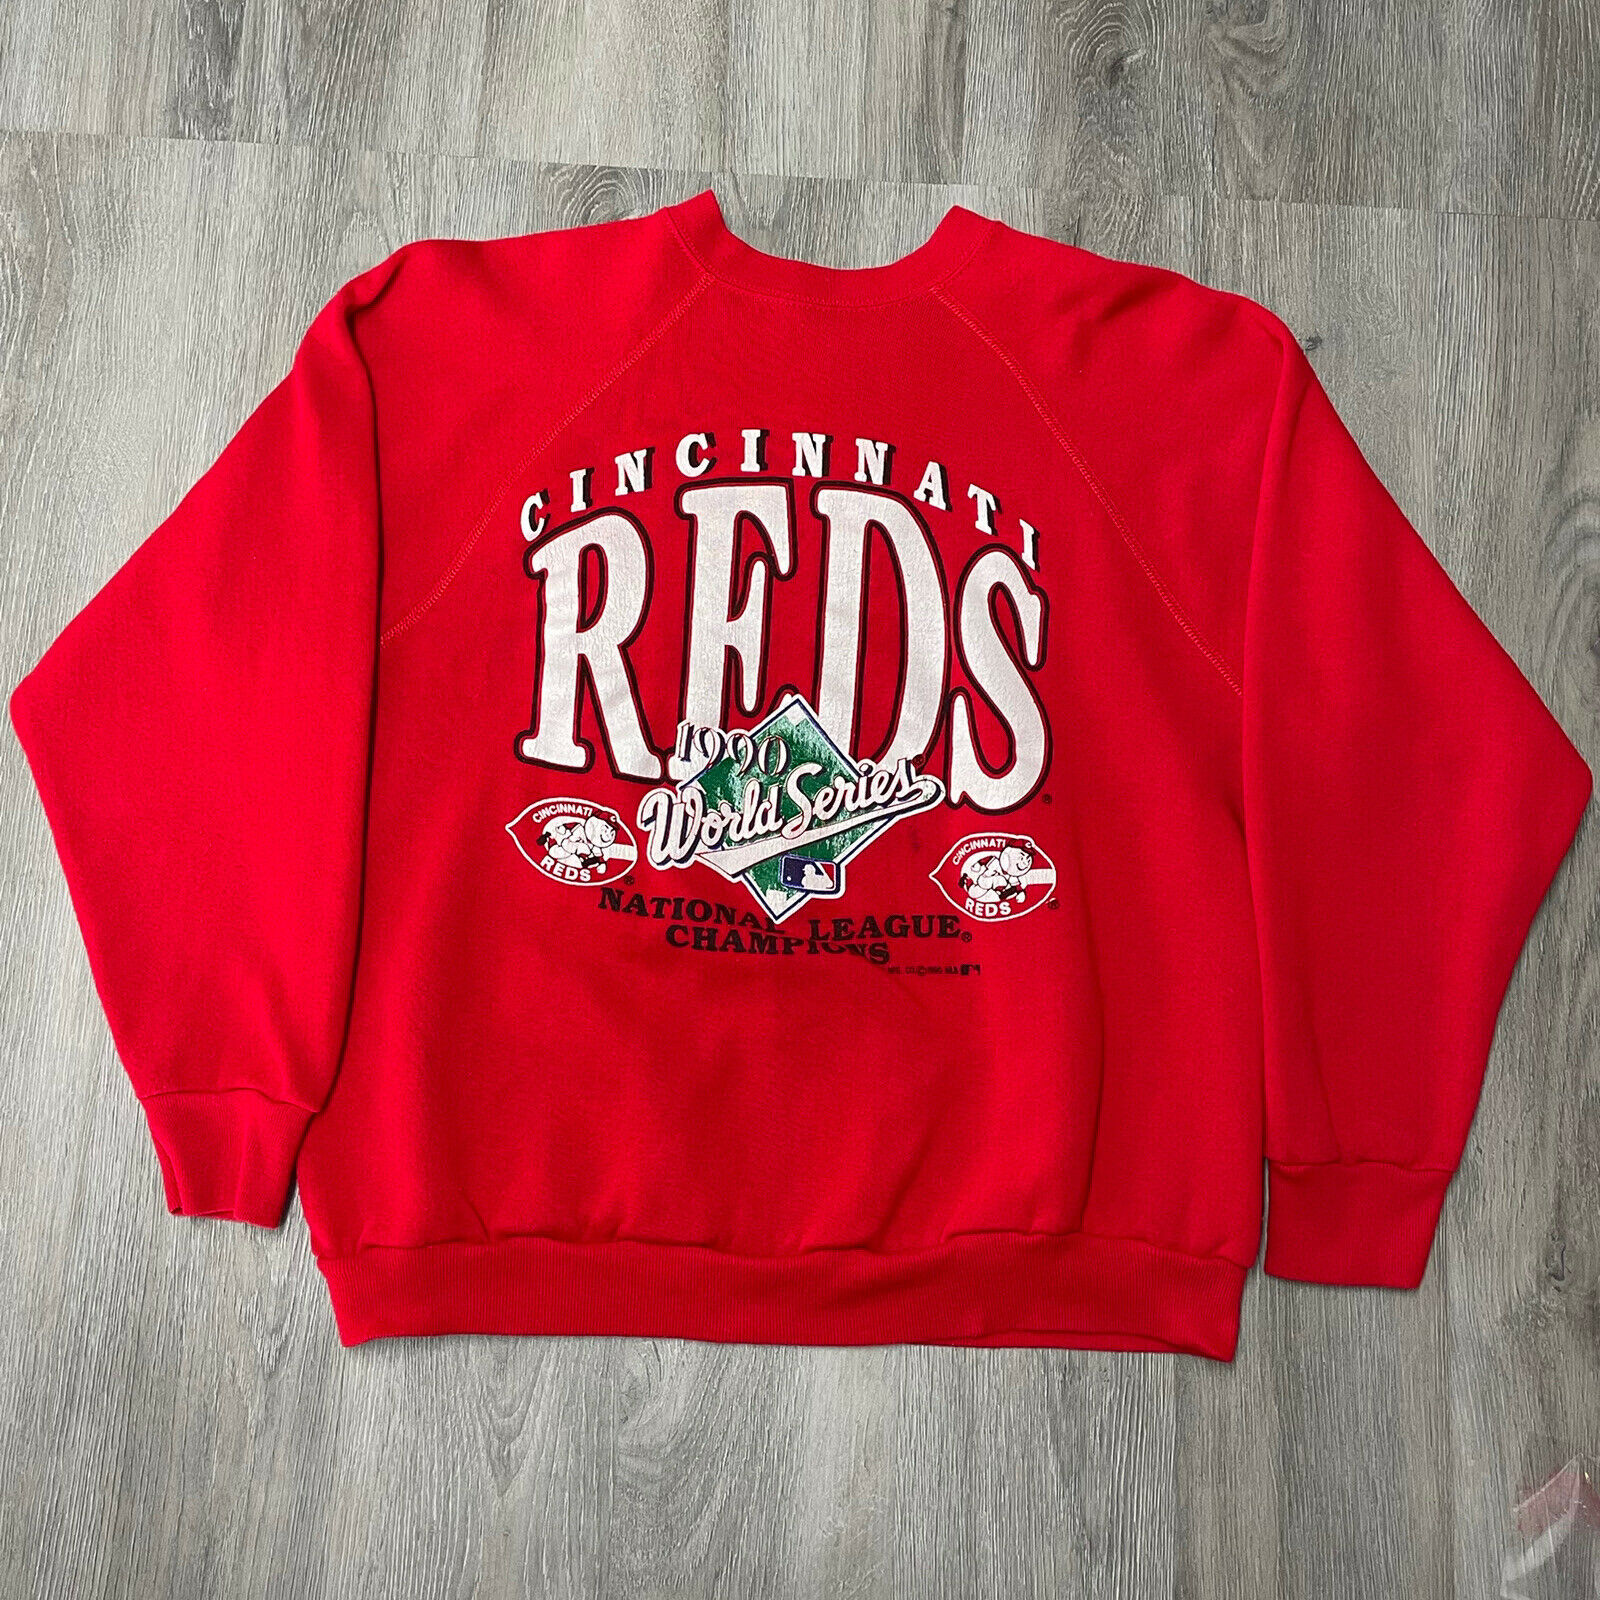 Cincinnati Reds 1990 World Series National League Champs Vintage Sweatshirt Xl